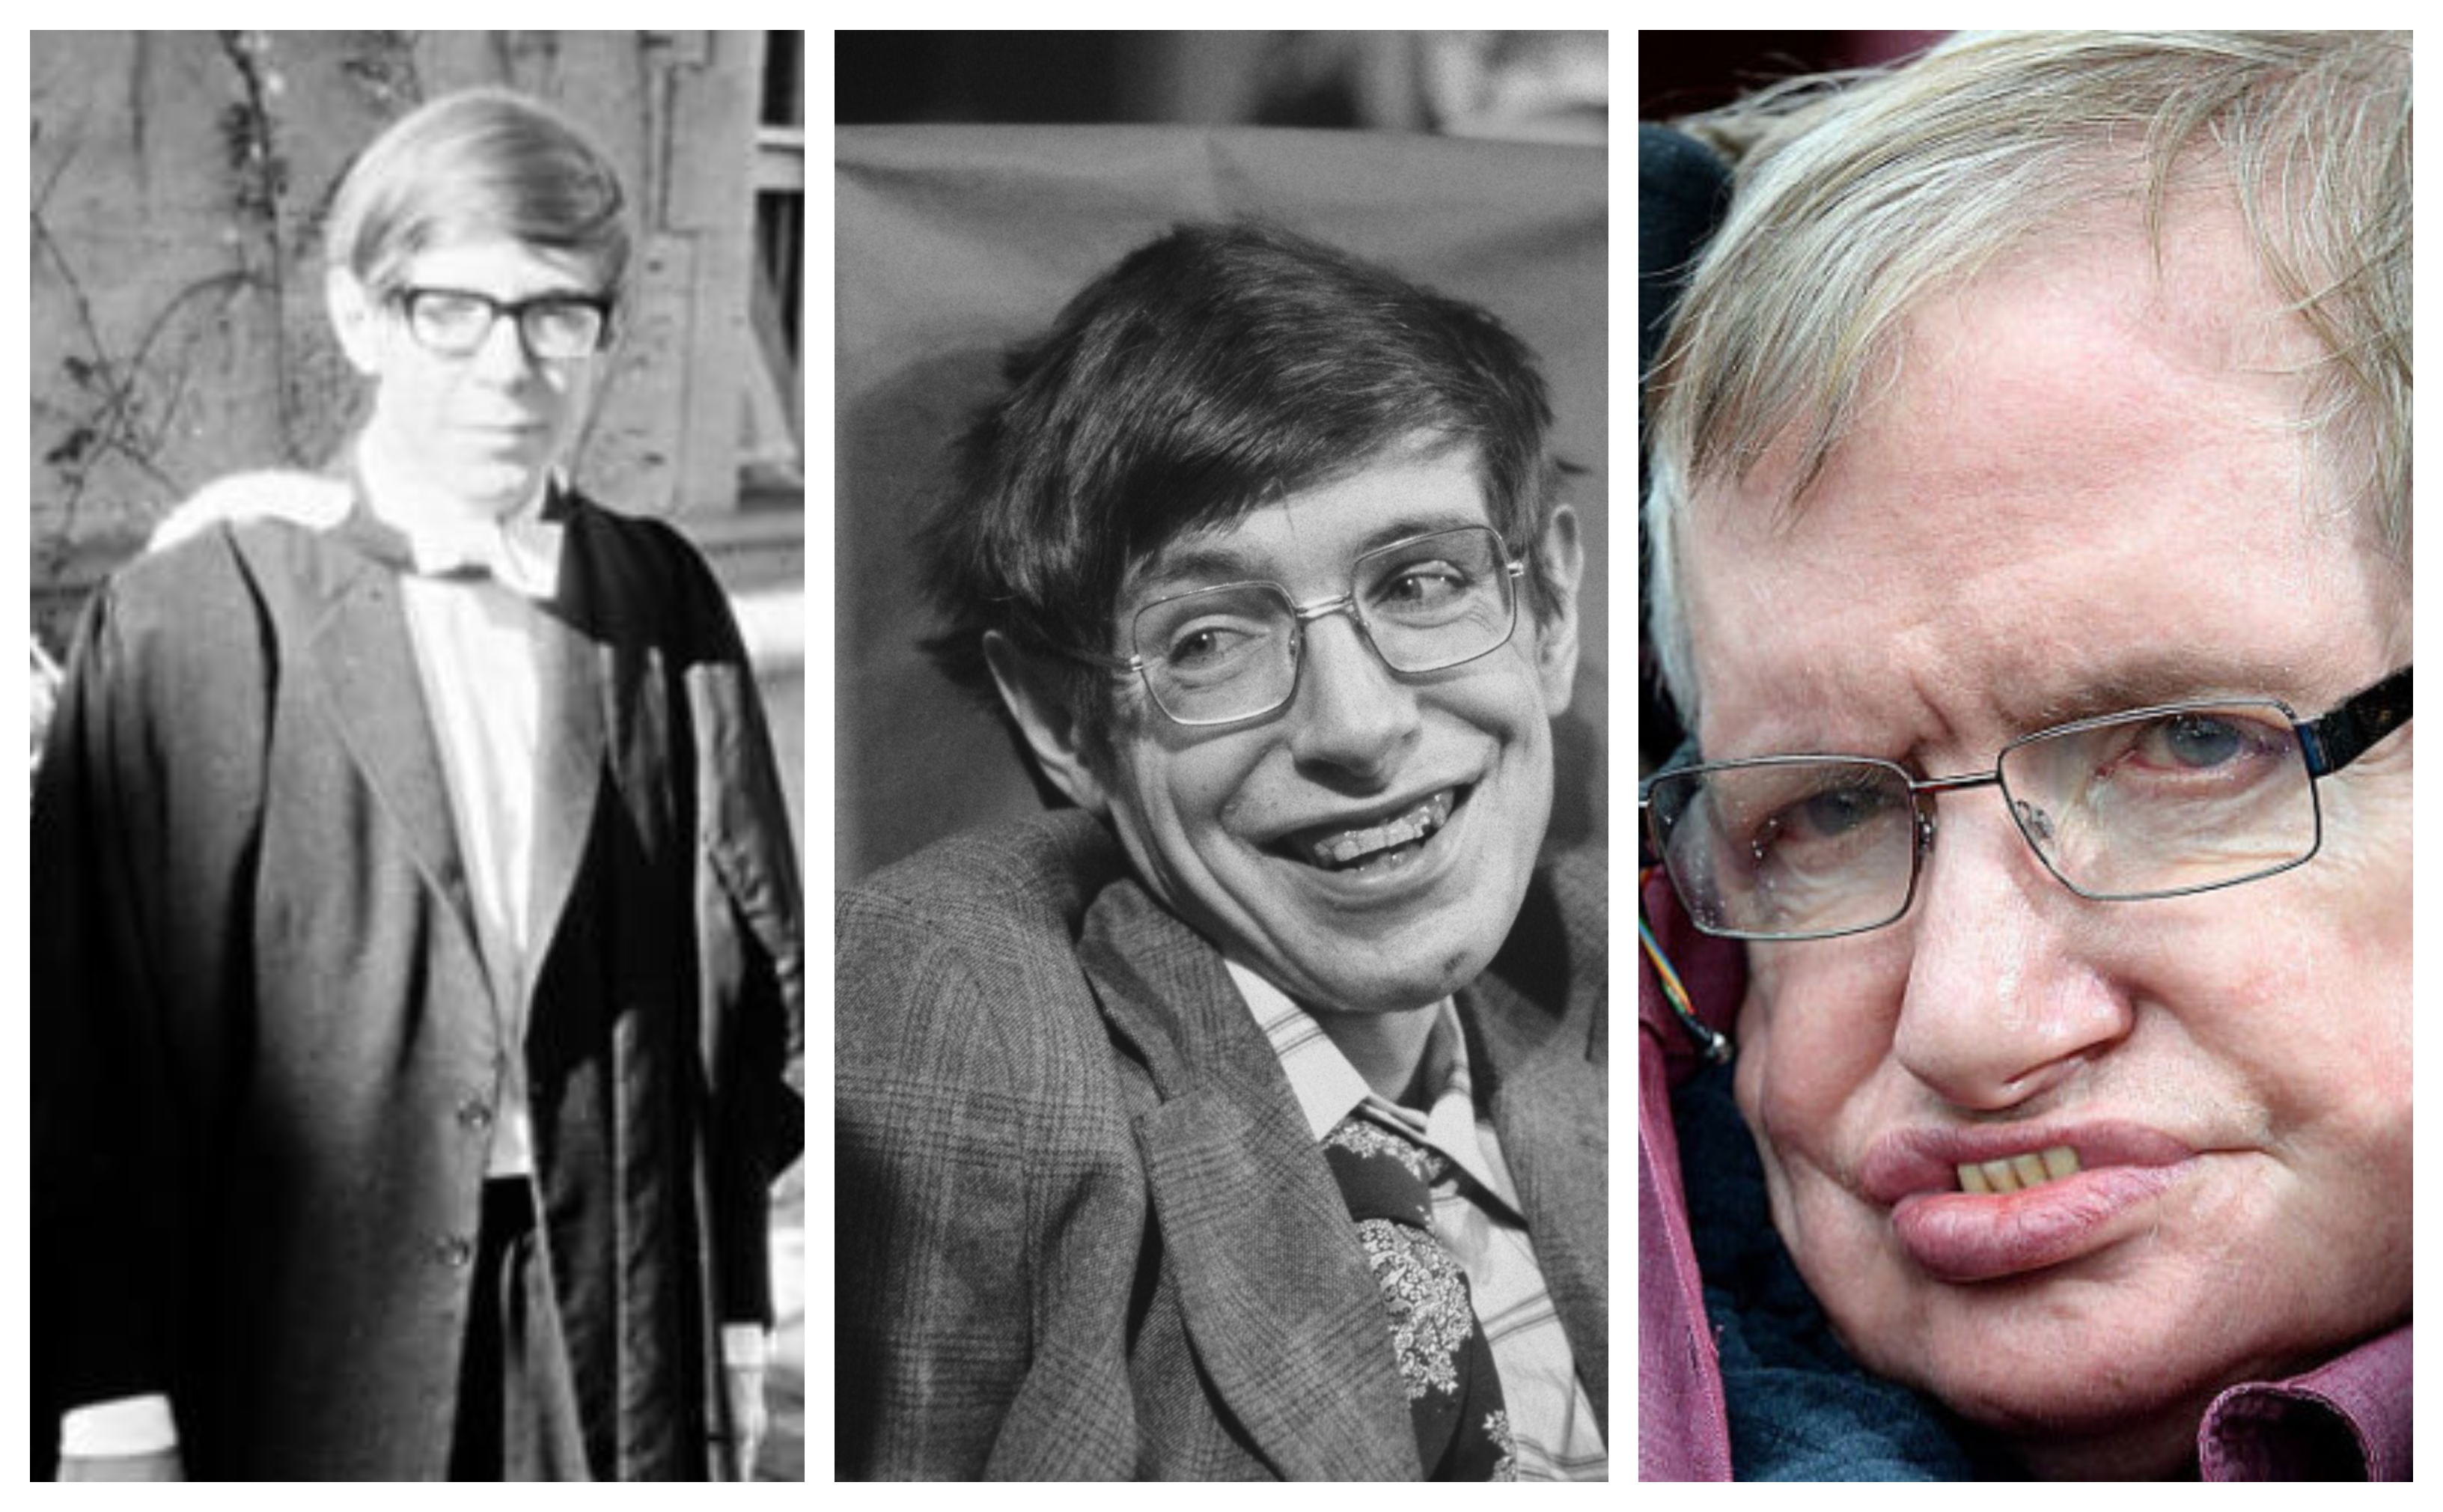 Stephen Hawking facts